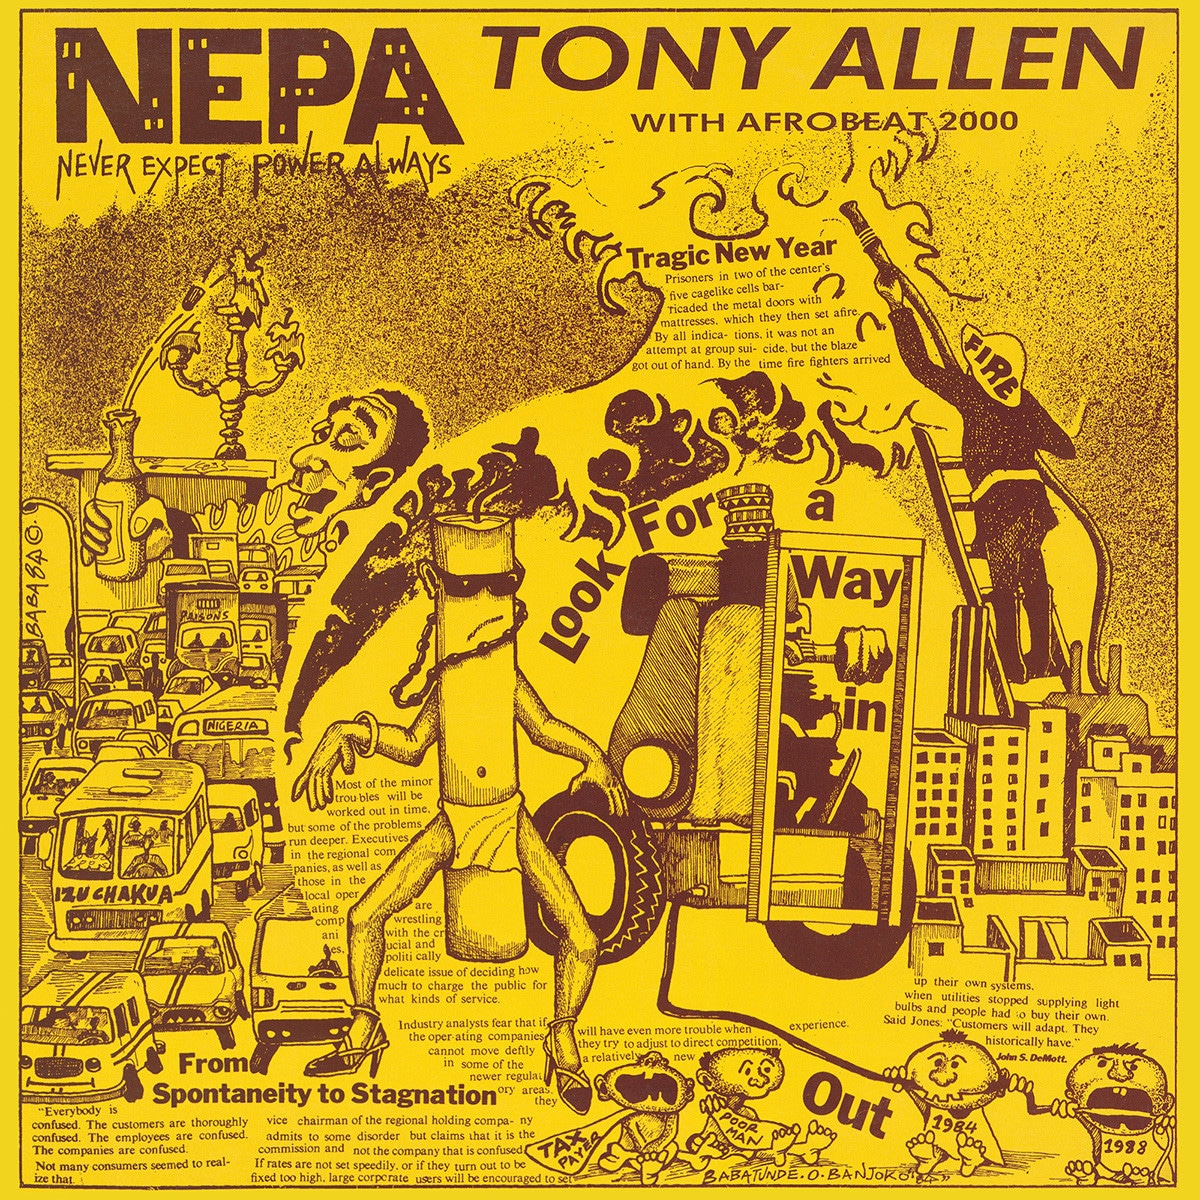 Tony Allen - N.E.P.A (Never Expect Power Always) - COMET102 - COMET RECORDS